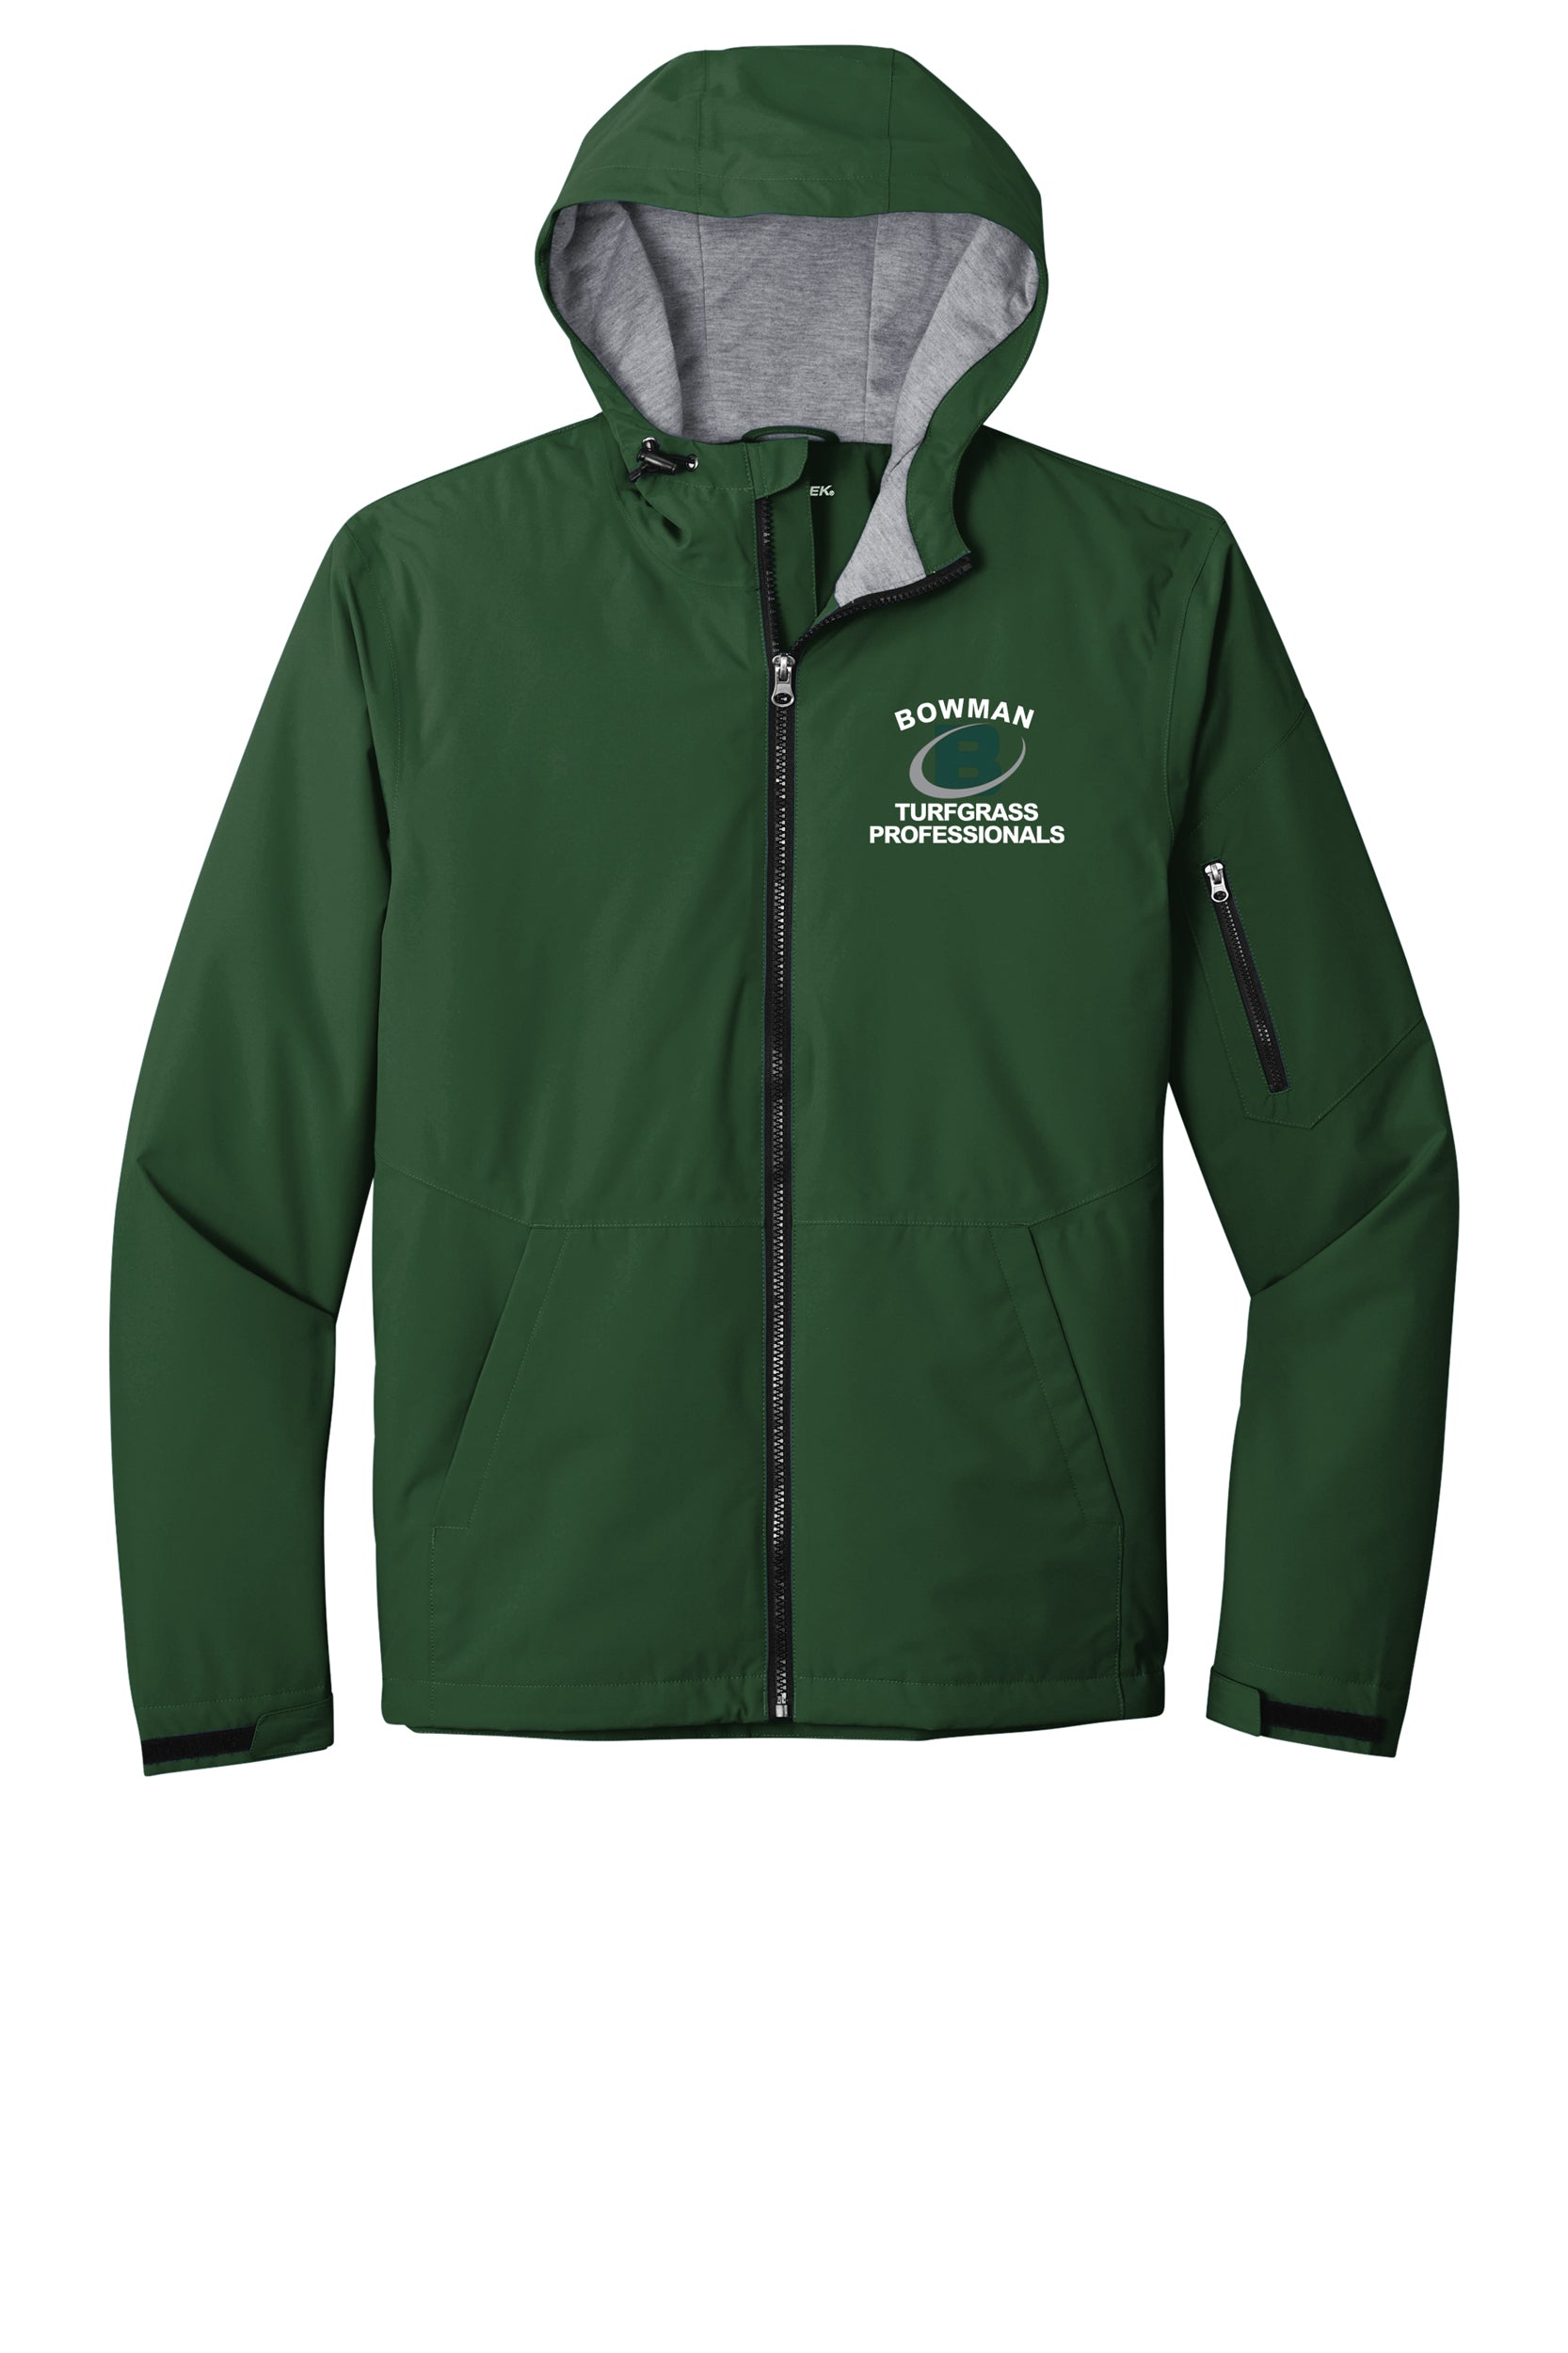 Bowman Turfgrass Professionals - Waterproof Insulated Jacket